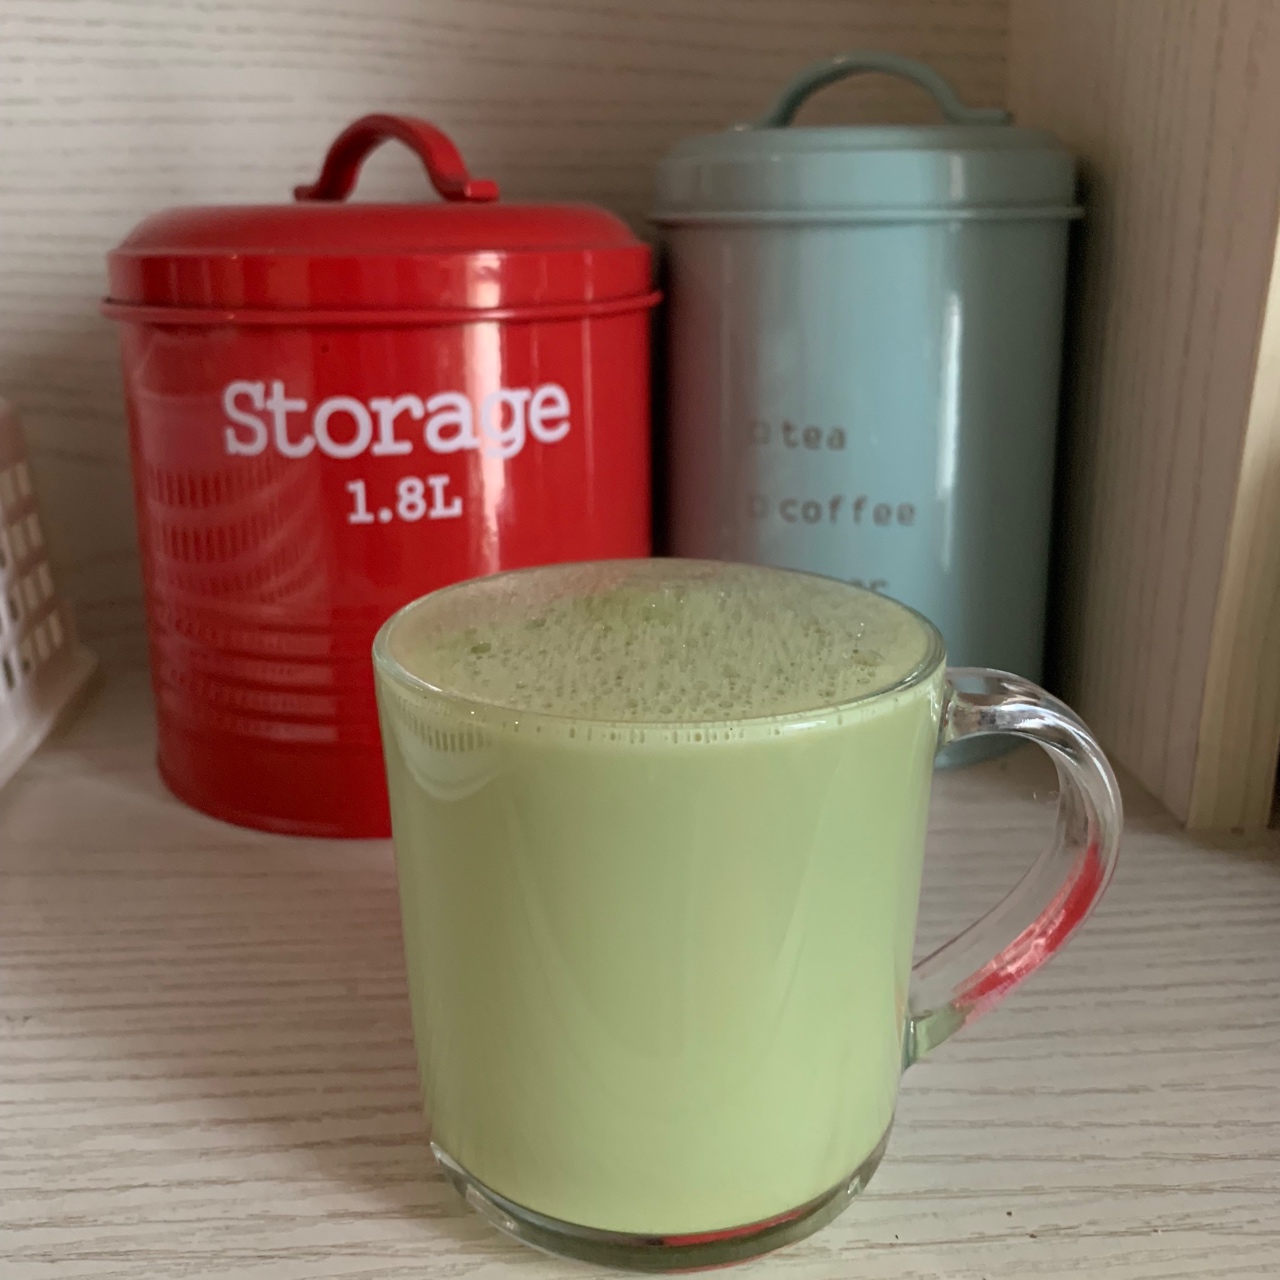 豆奶抹茶拿铁 (Soy Green Tea Latte)